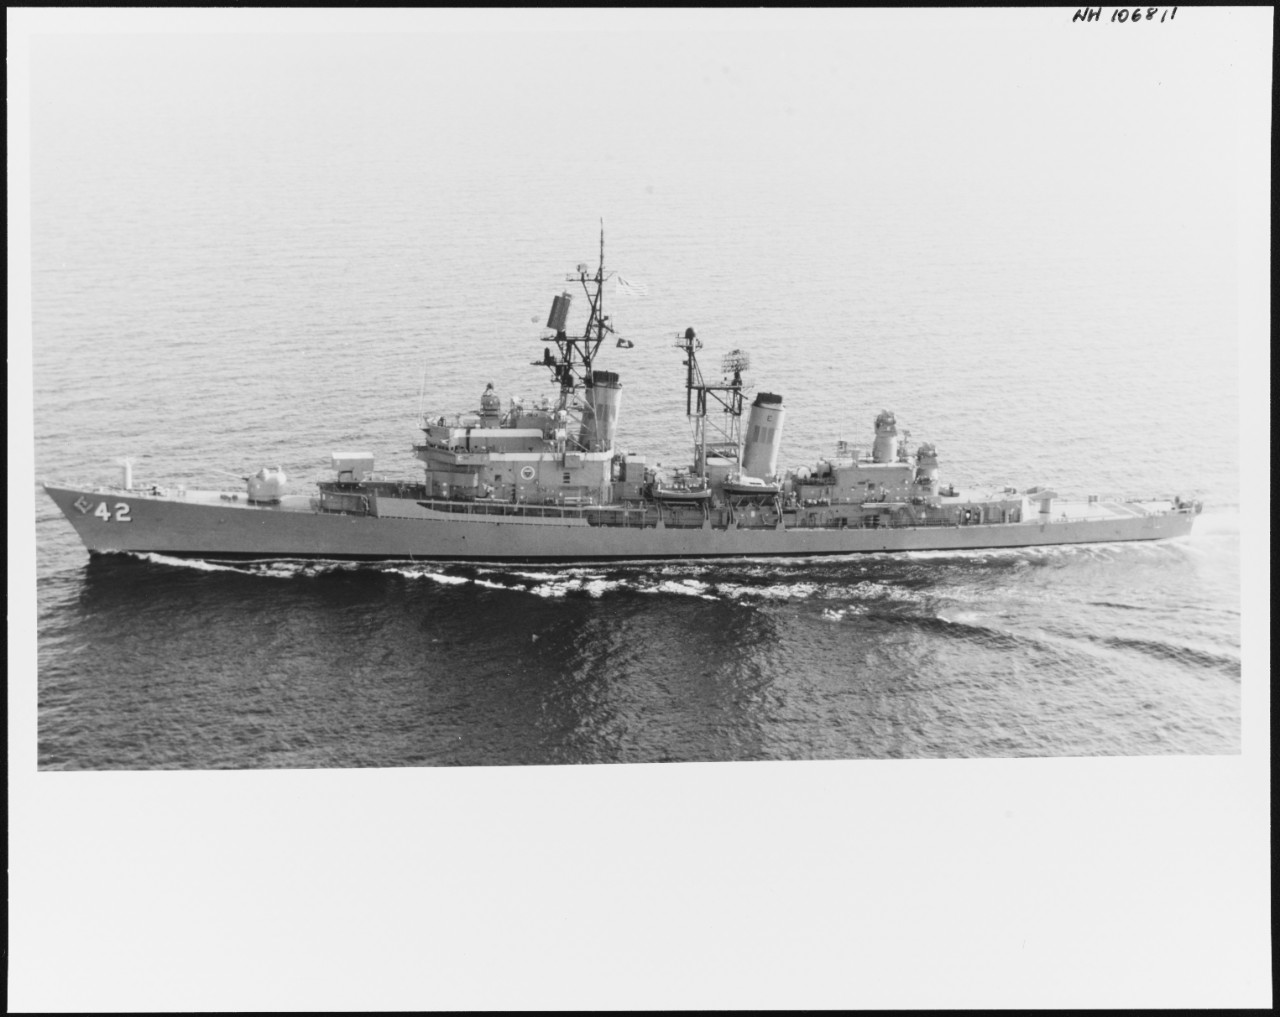 Photo # NH 106811  USS Mahan